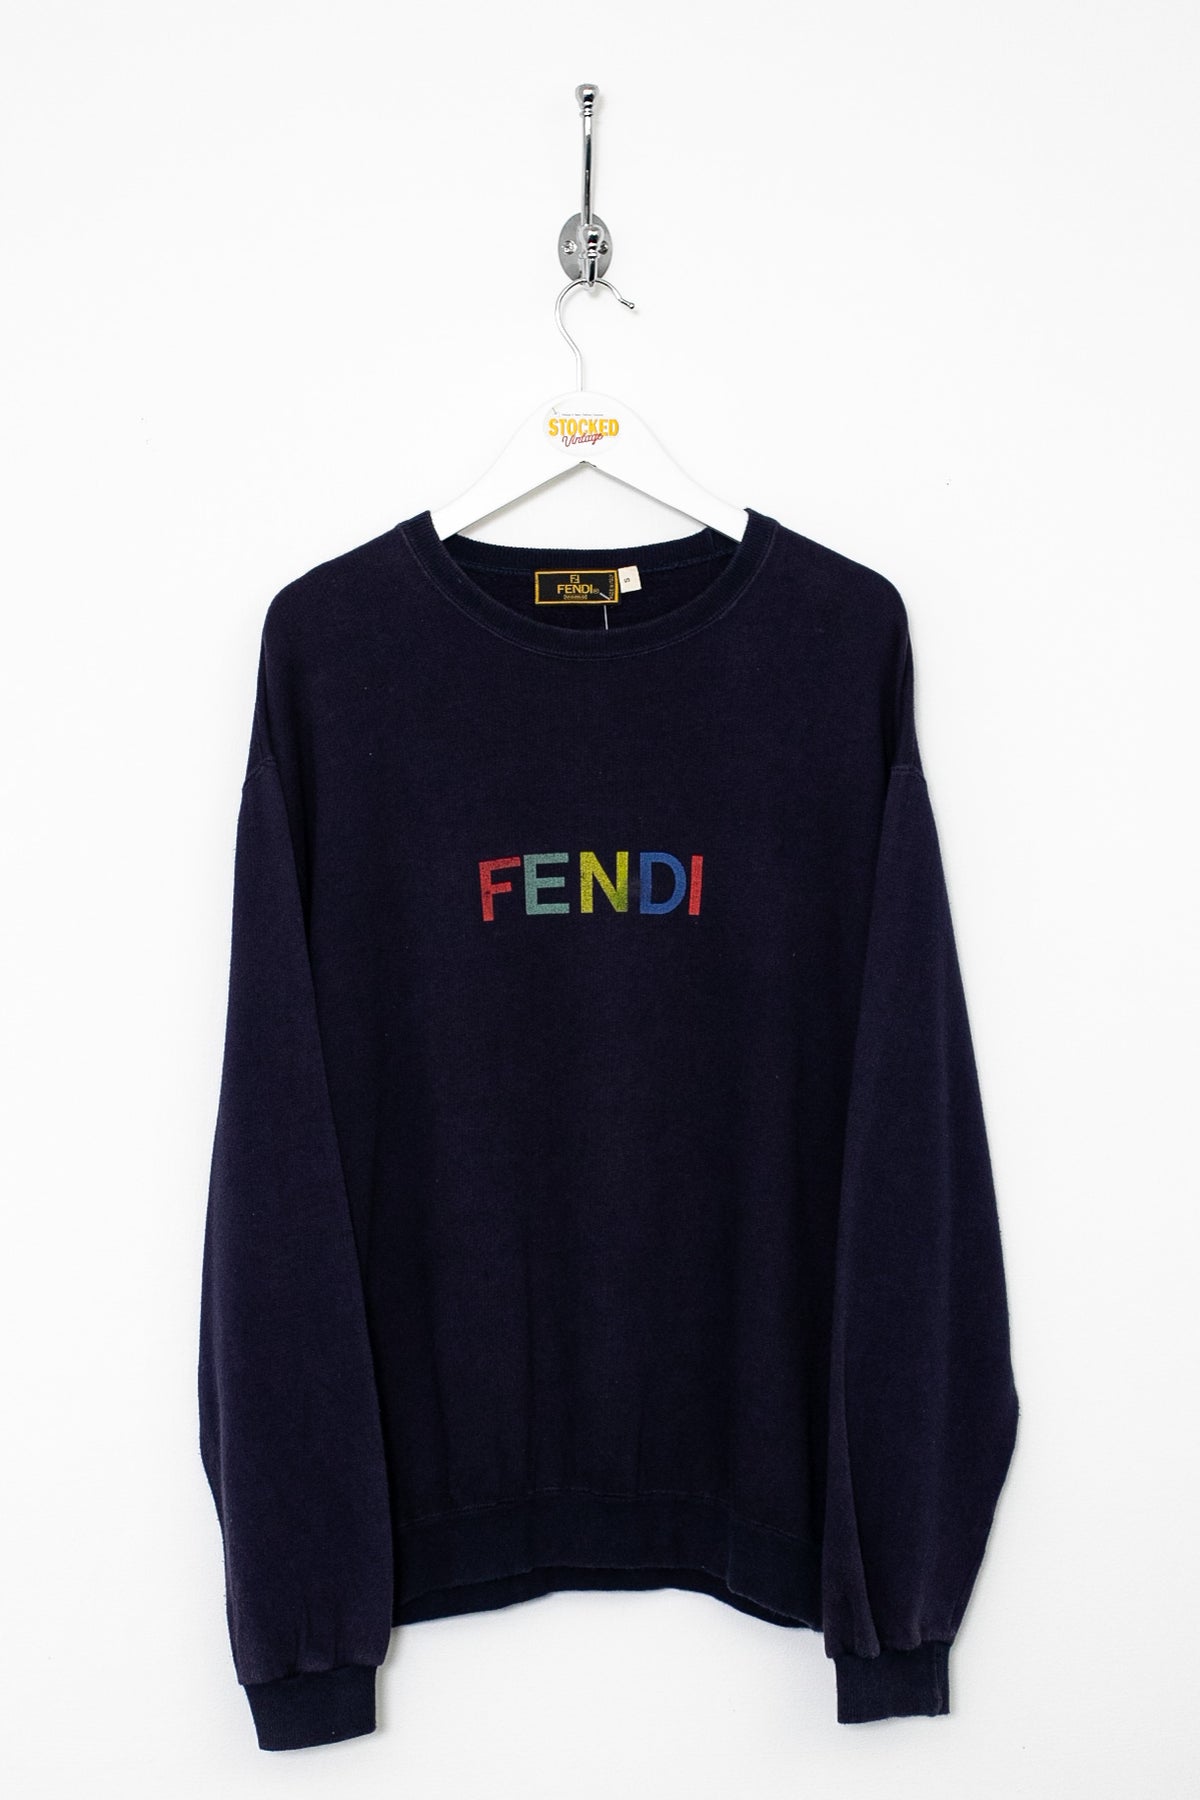 90s Fendi Sweatshirt (M)